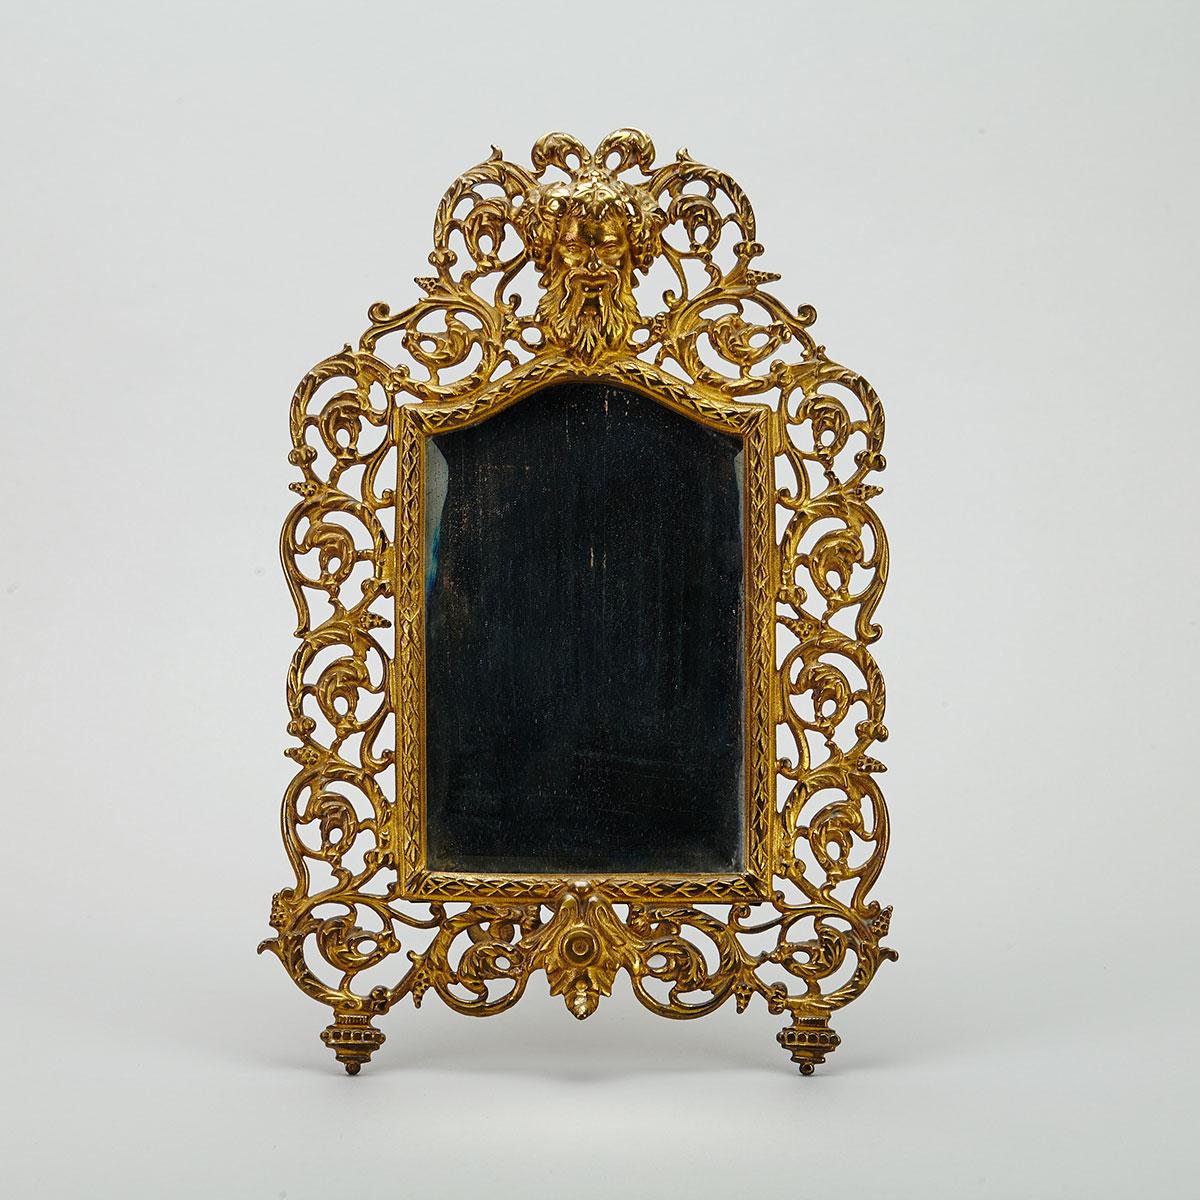 Bradley & Hubbard Gilt Cast Iron Easel Mirror, late 19th century